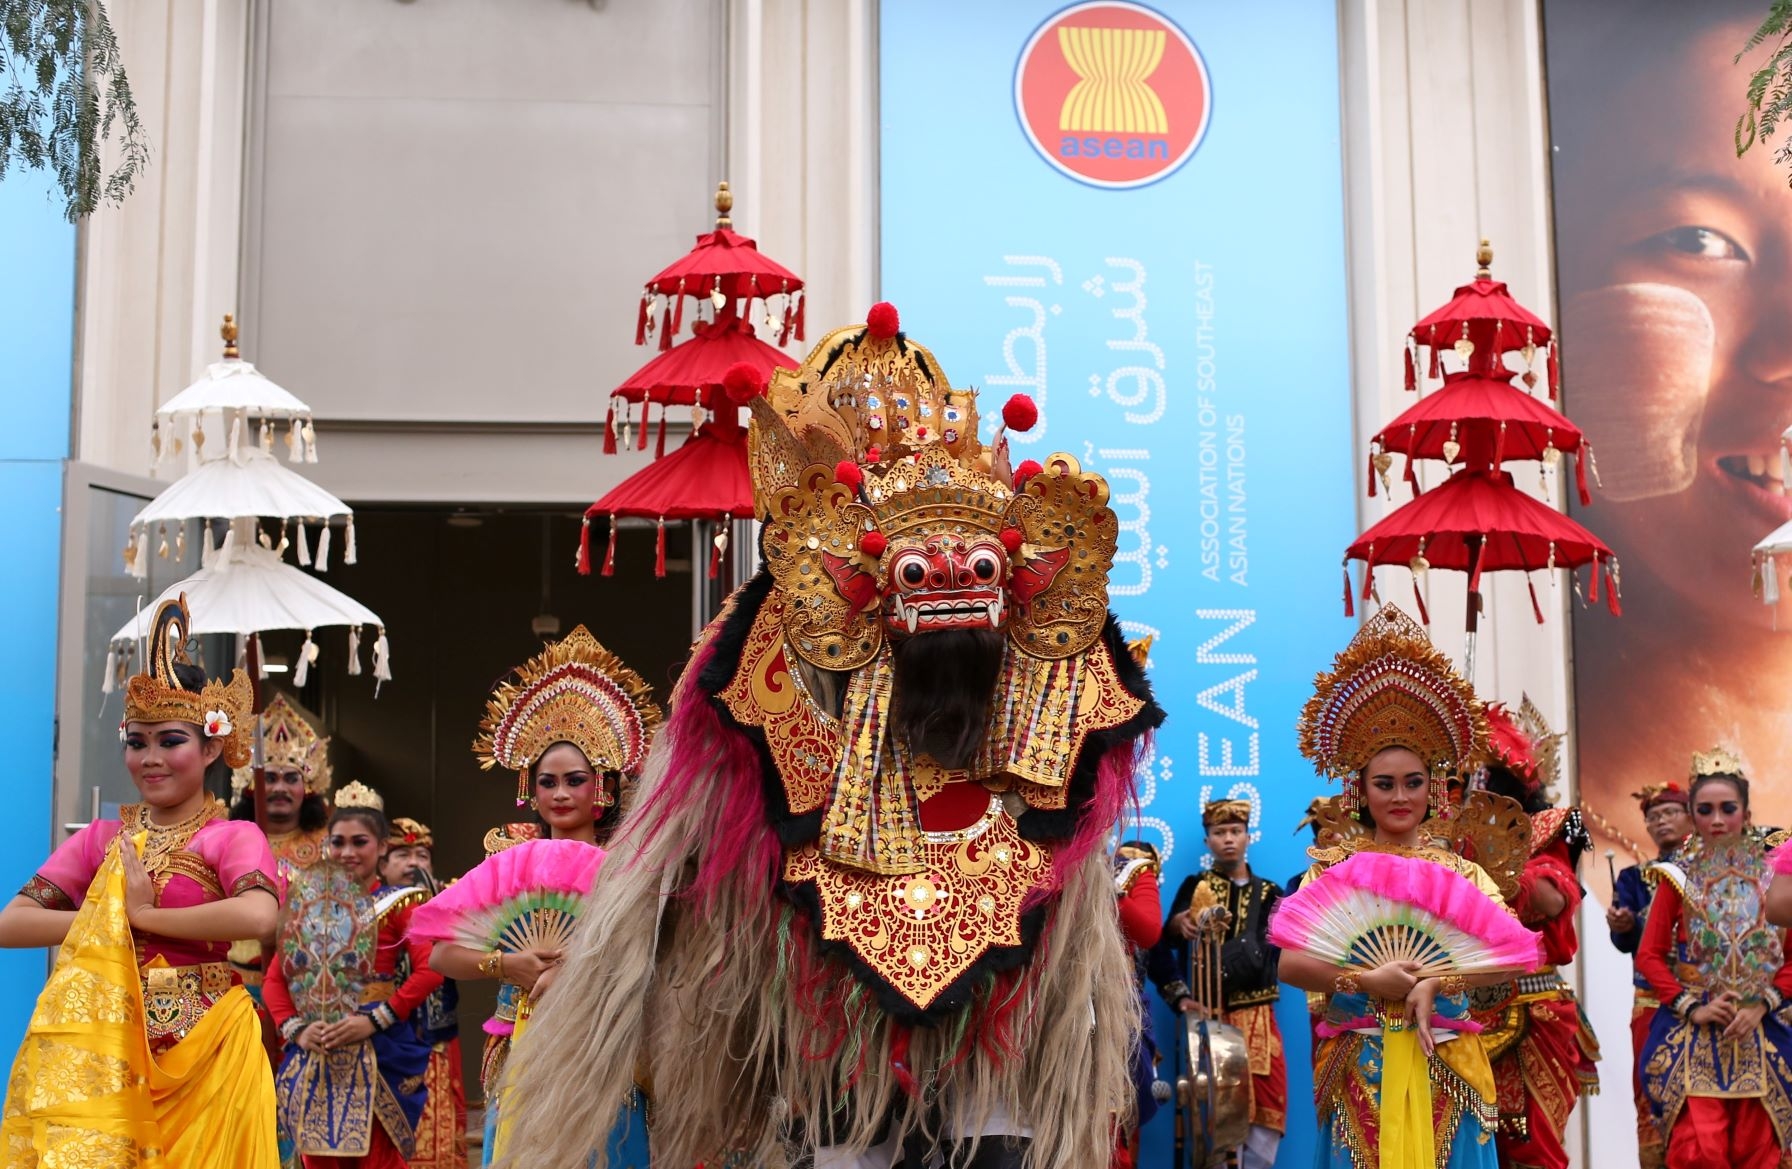 Parade Budaya Bali Wakilkan Indonesia Tahun Baruan di EXPO 2020 Dubai